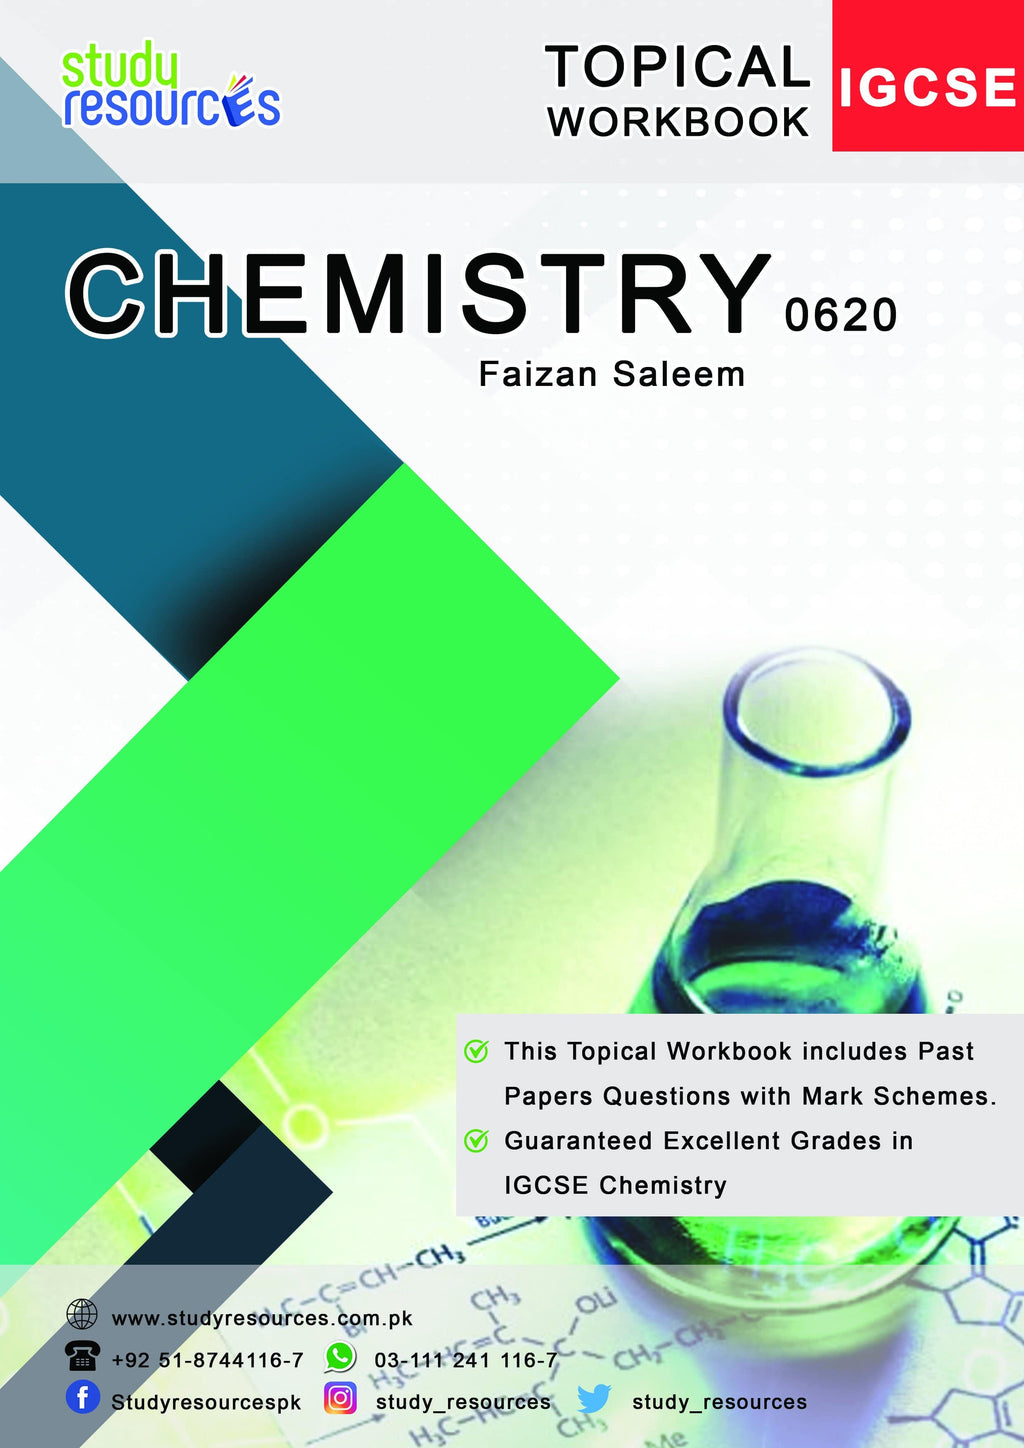 Cambridge IGCSE Chemistry (0620) Topical Workbook by Sir Faizan Saleem